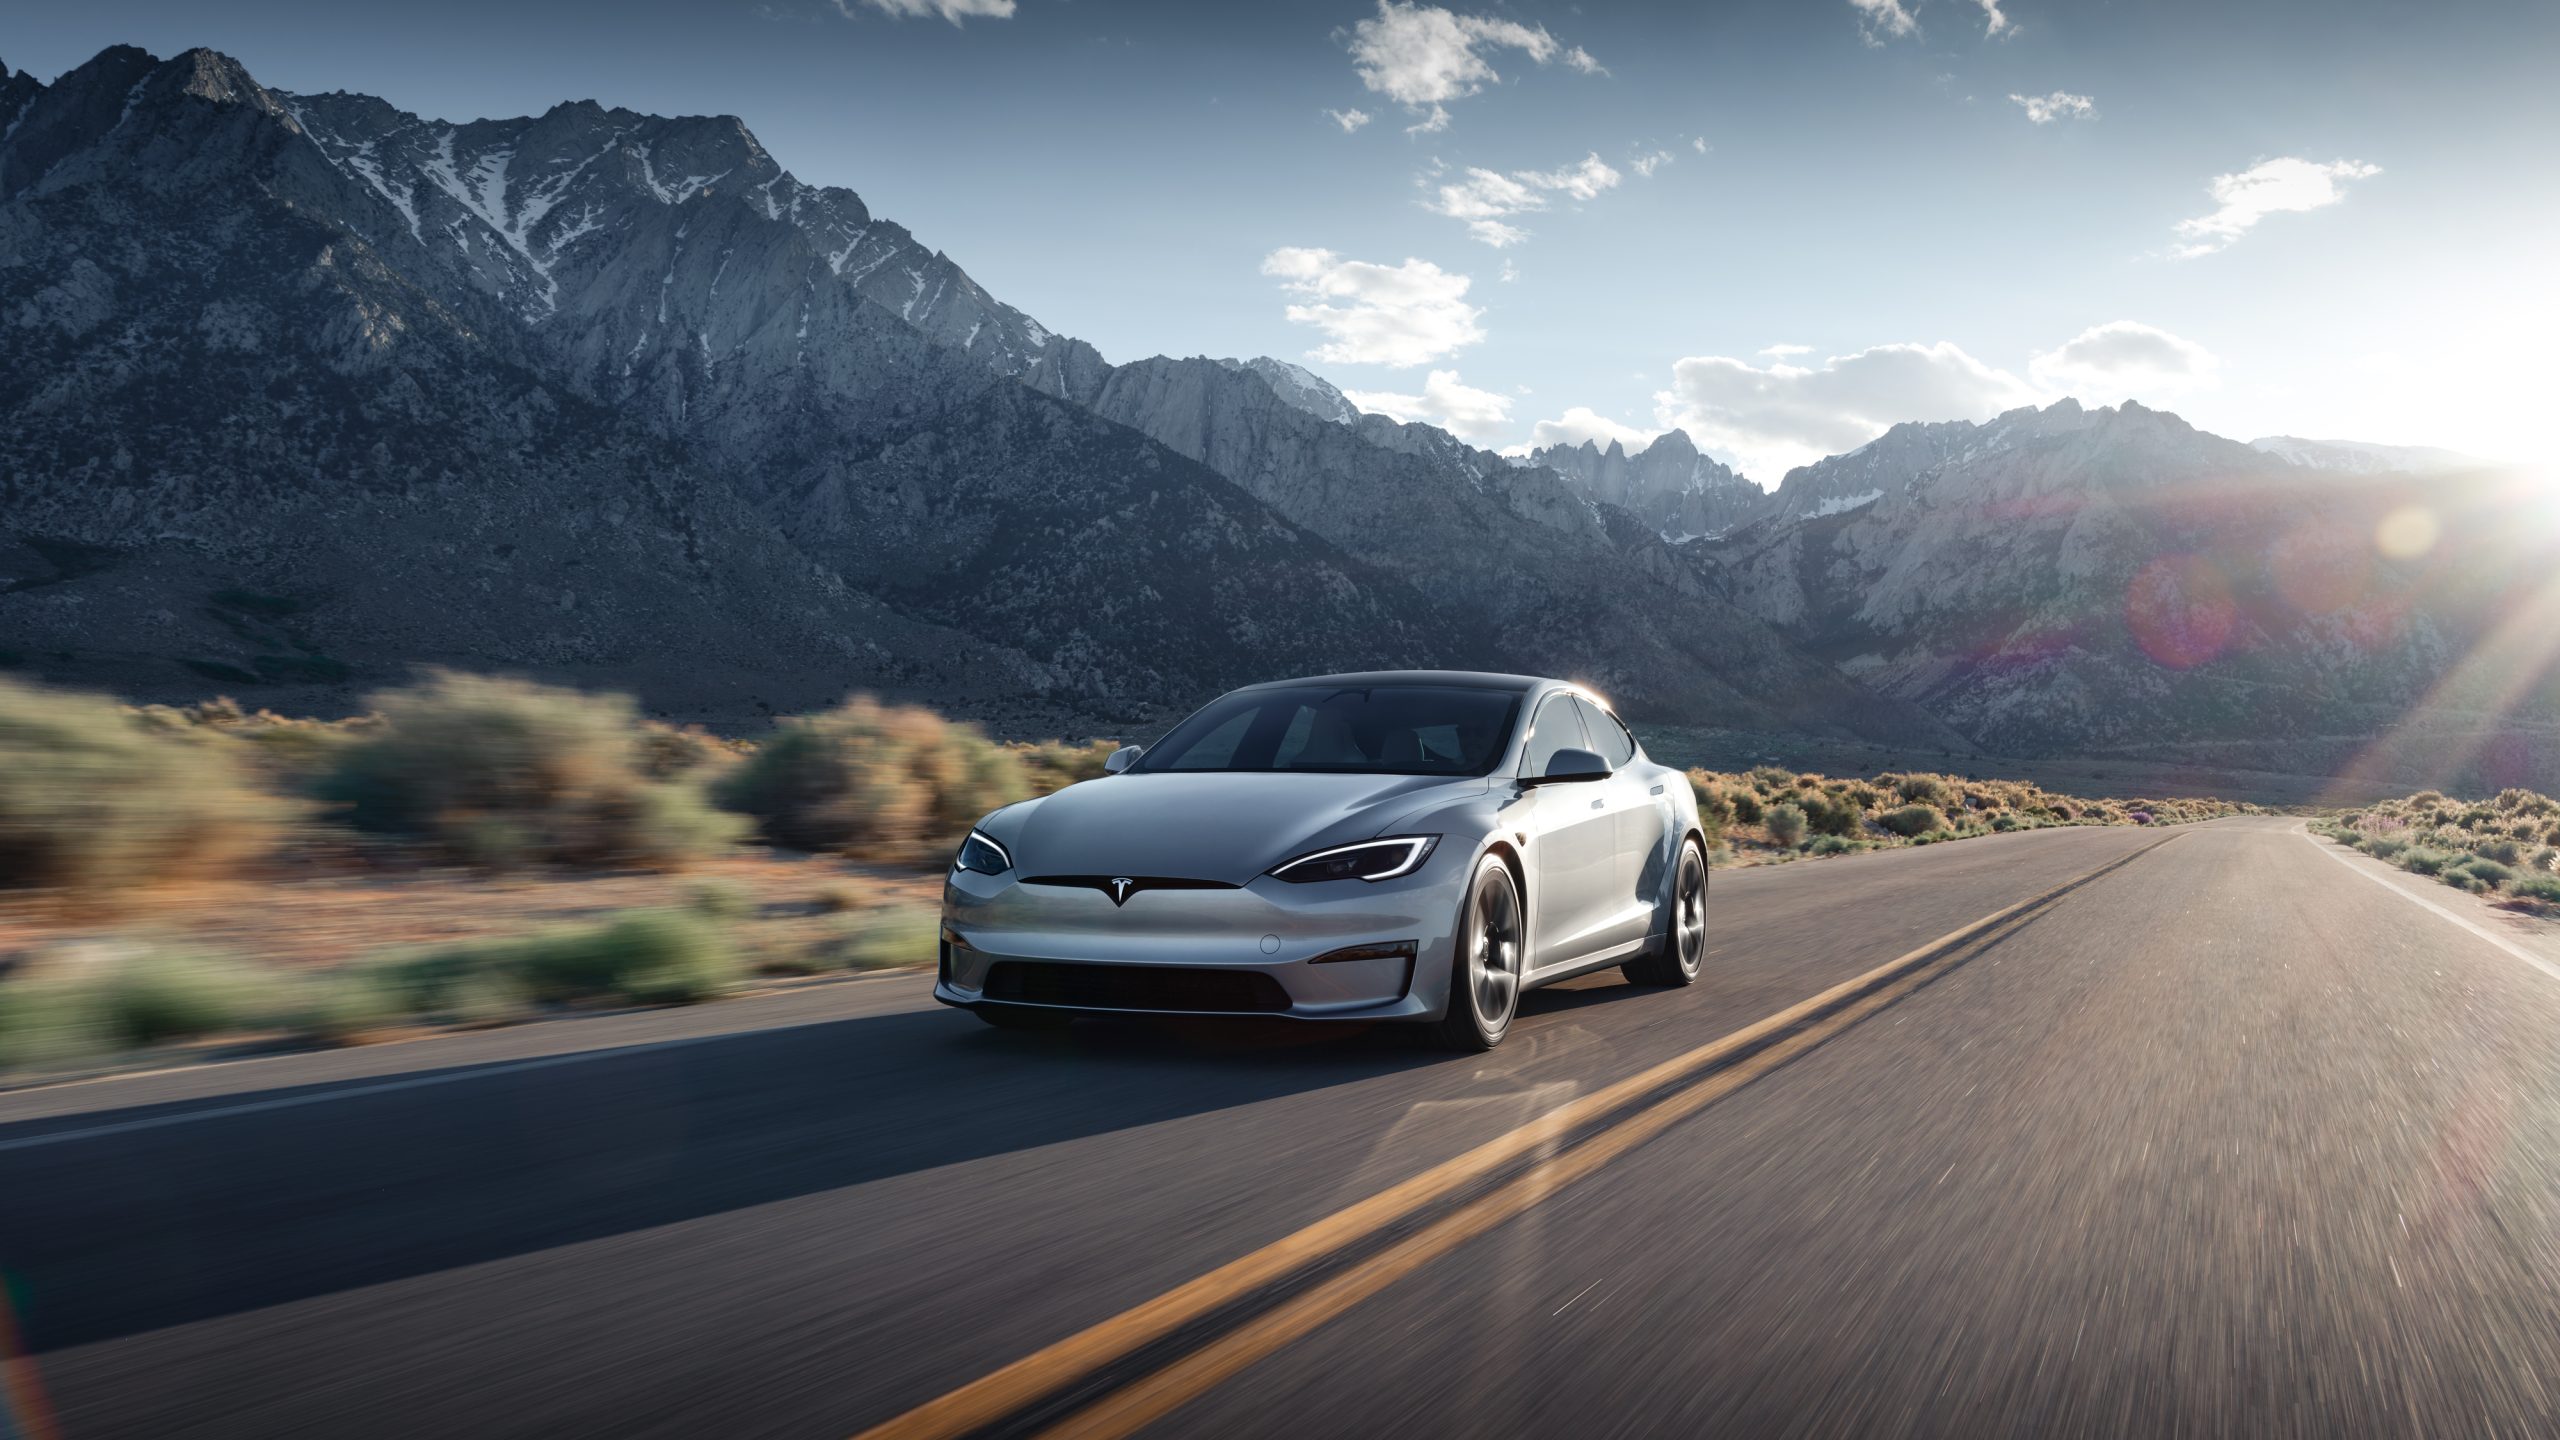 Tesla Model S Cruising Down a Road